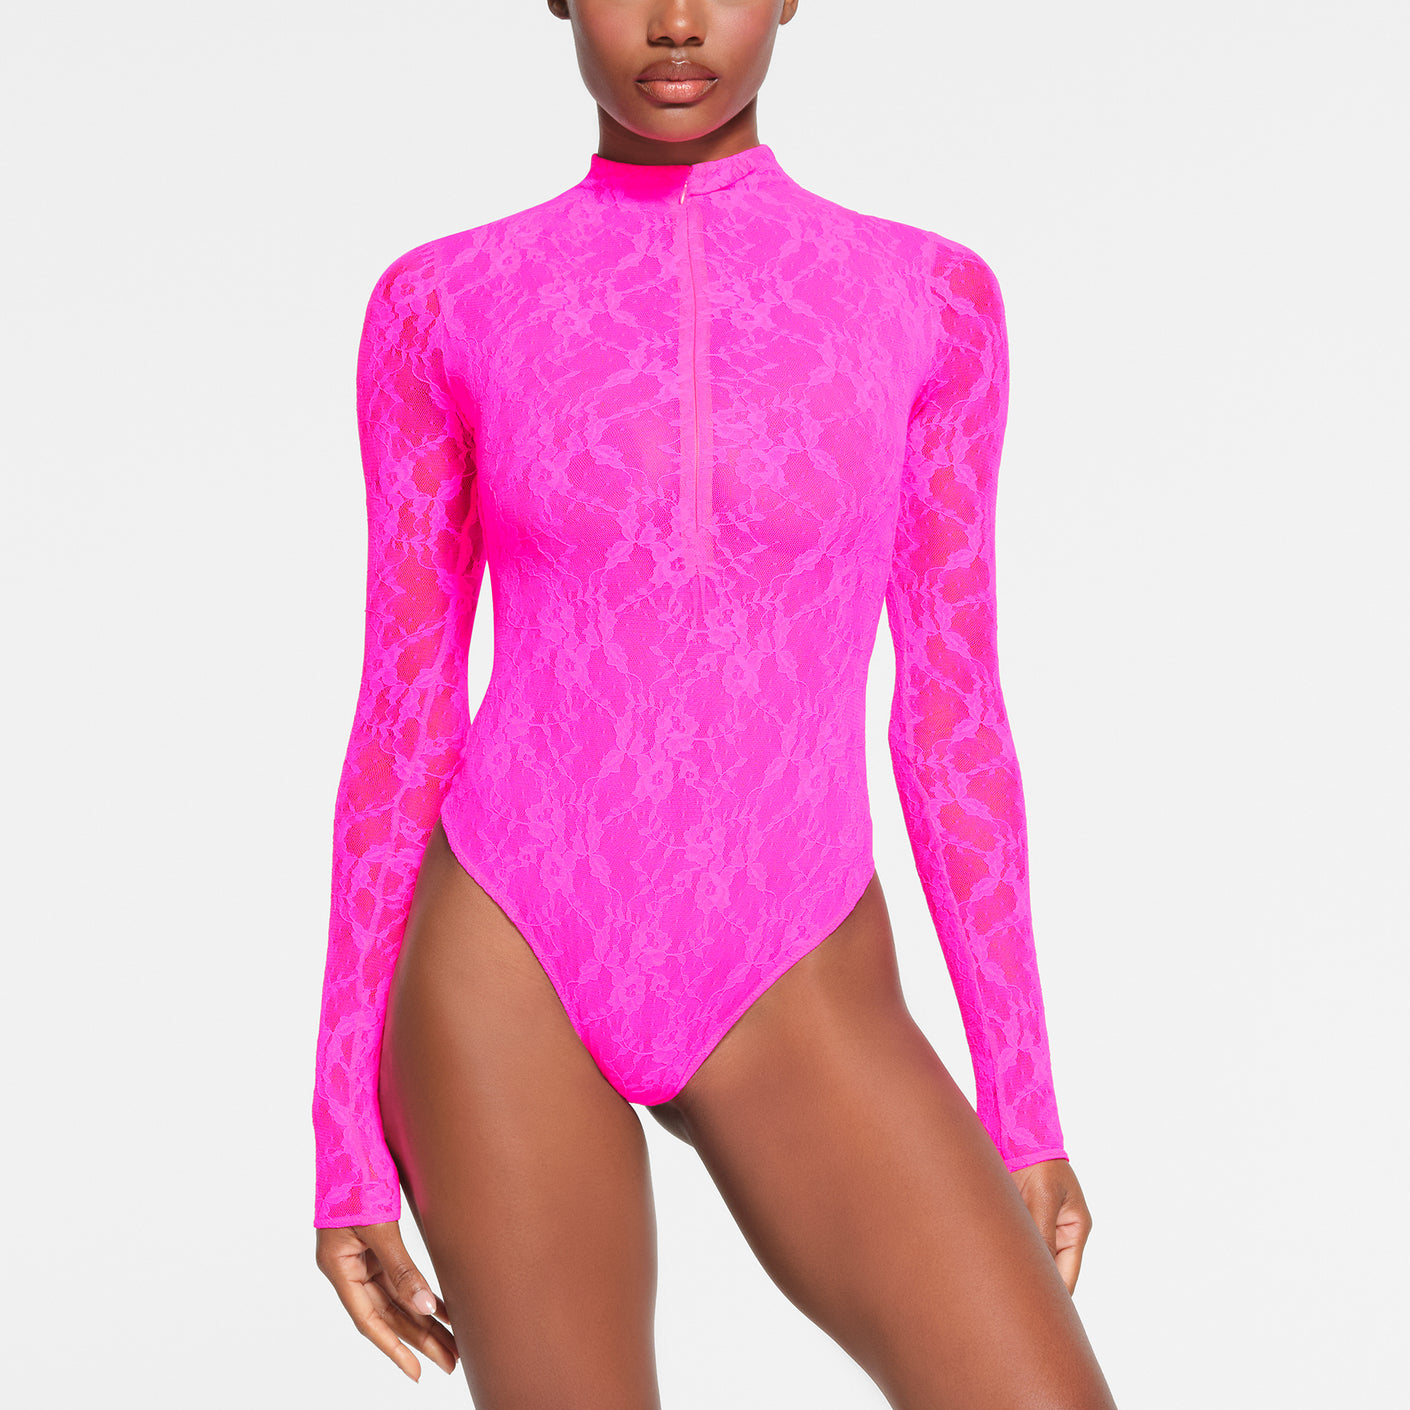 Simply Flirty Pink Sleeveless Bodysuit